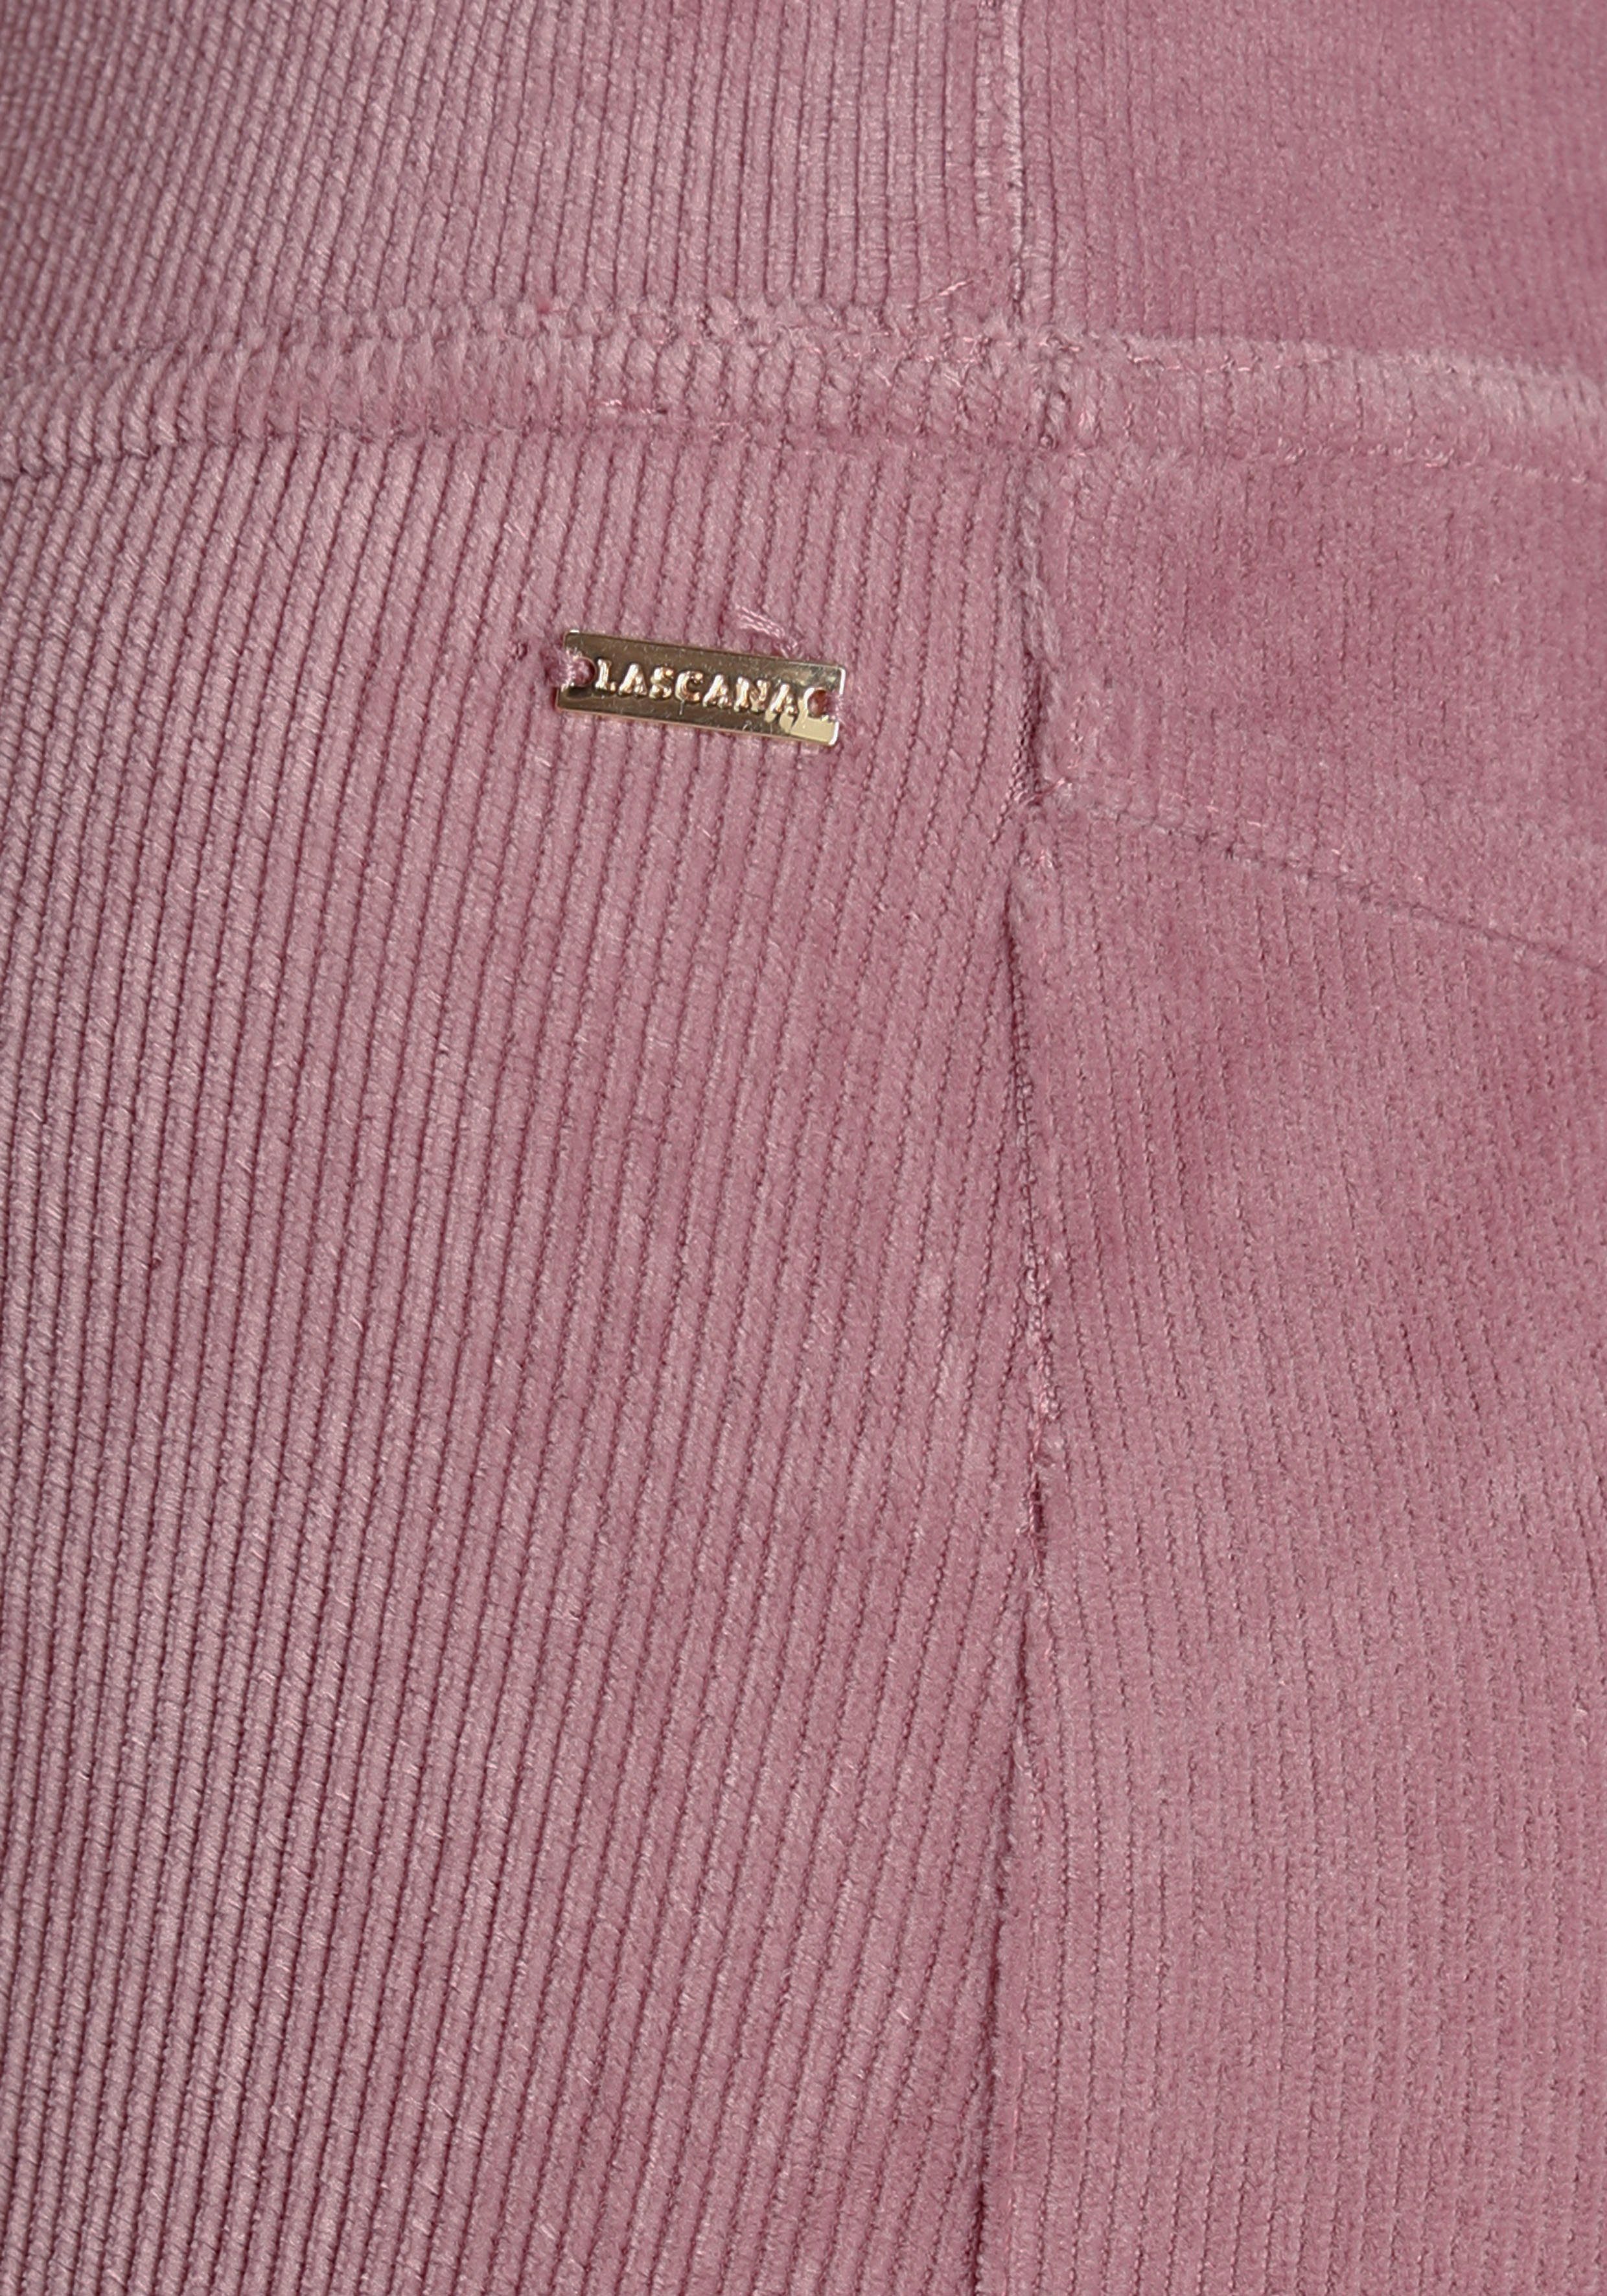 Leggings weichem rosa aus Cord-Optik, LASCANA in Material Loungewear